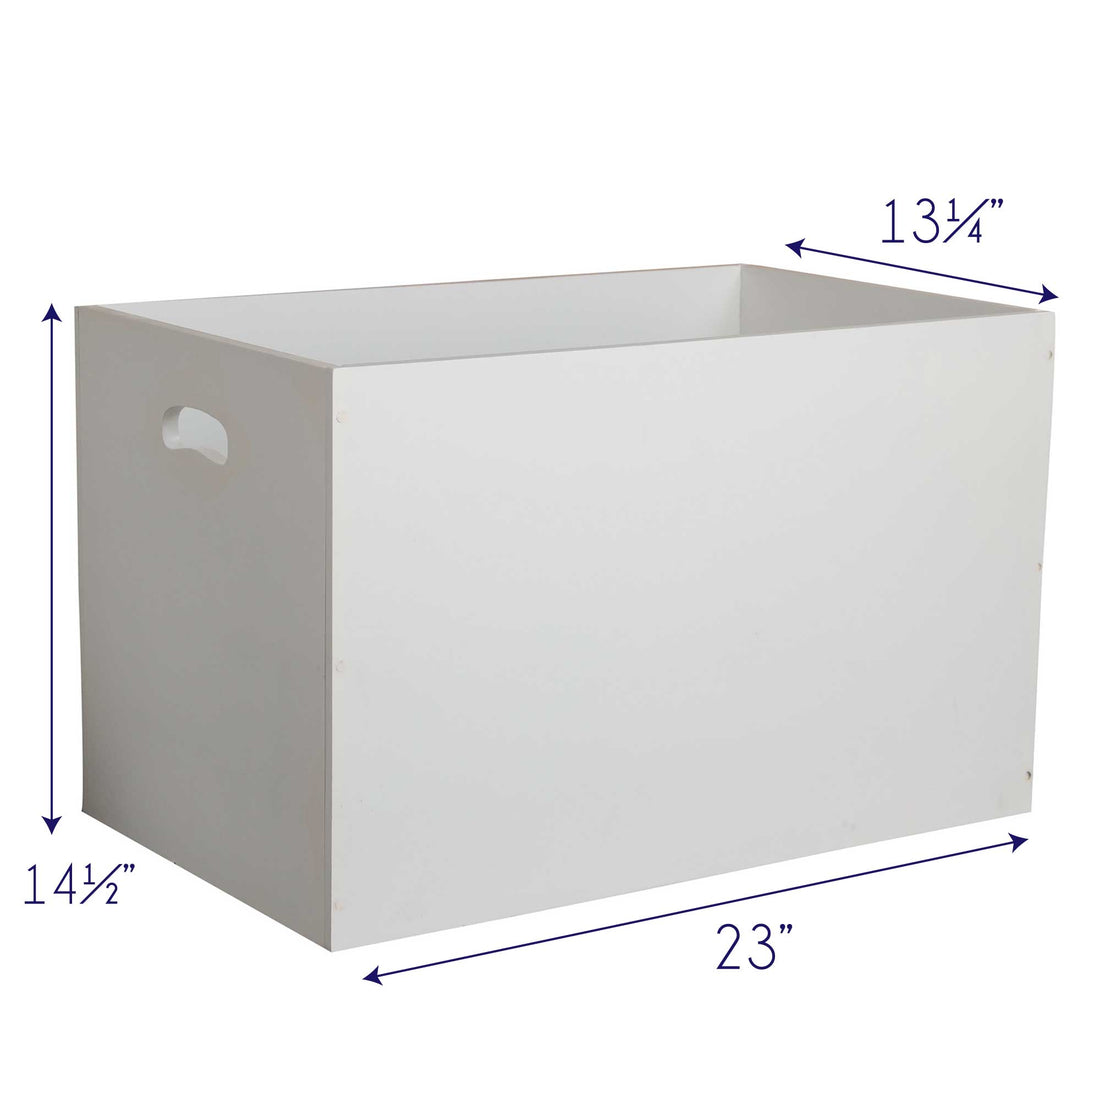 Open White Toy Box Bench with Swim design